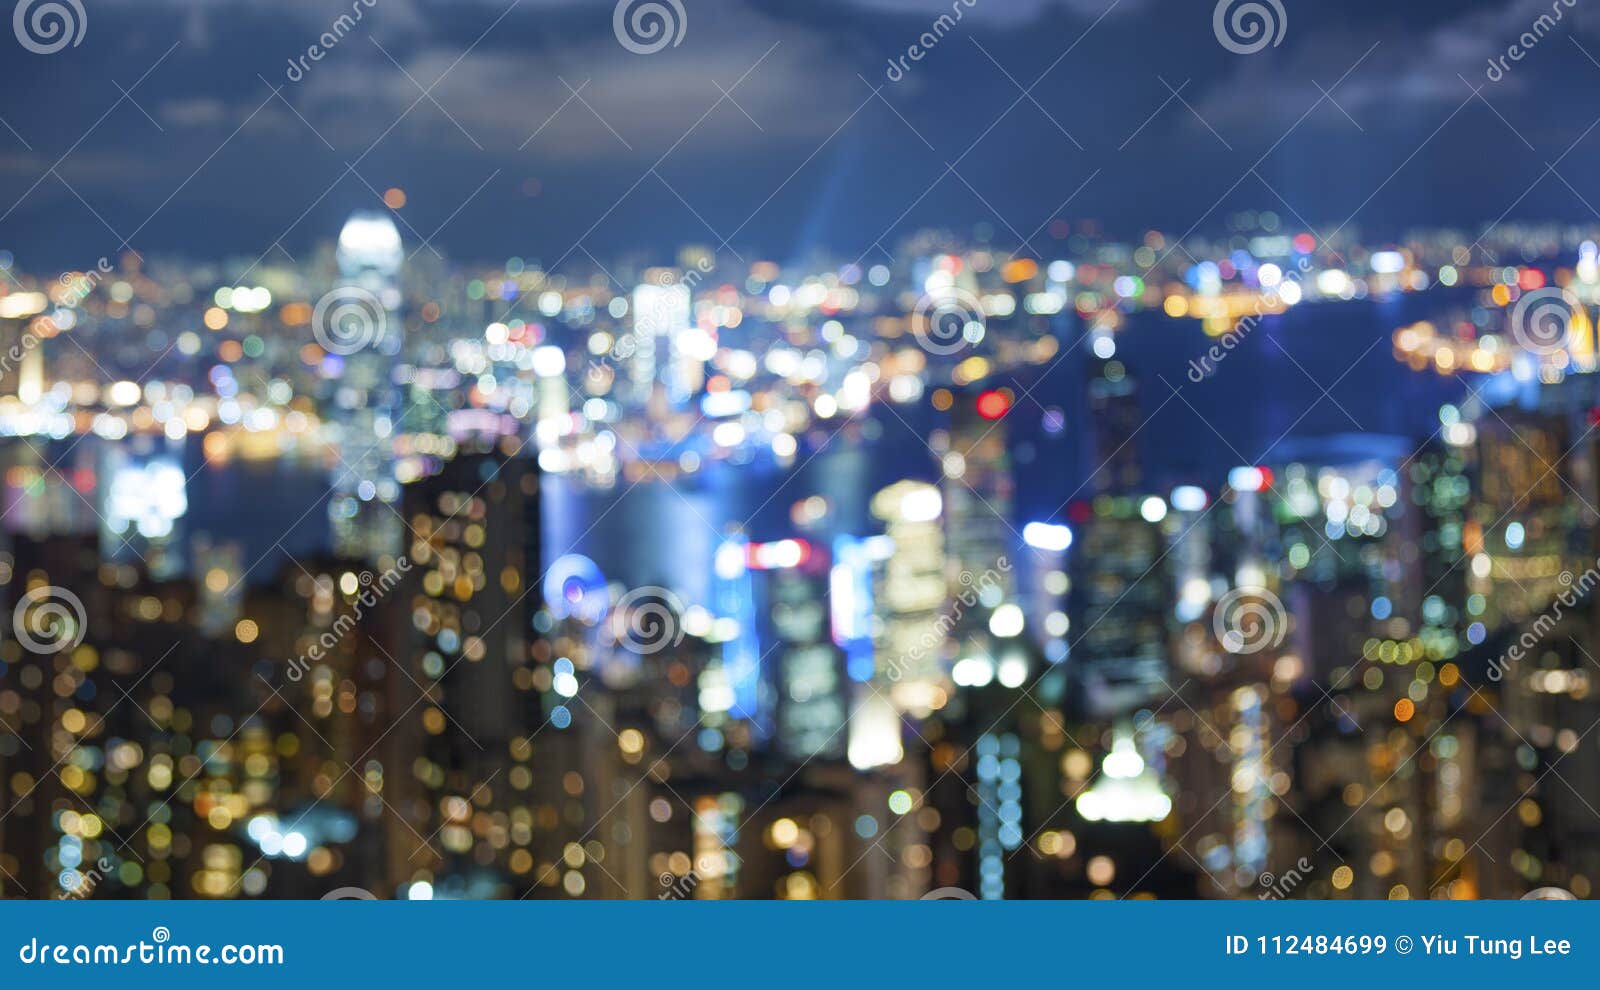 blurred city light